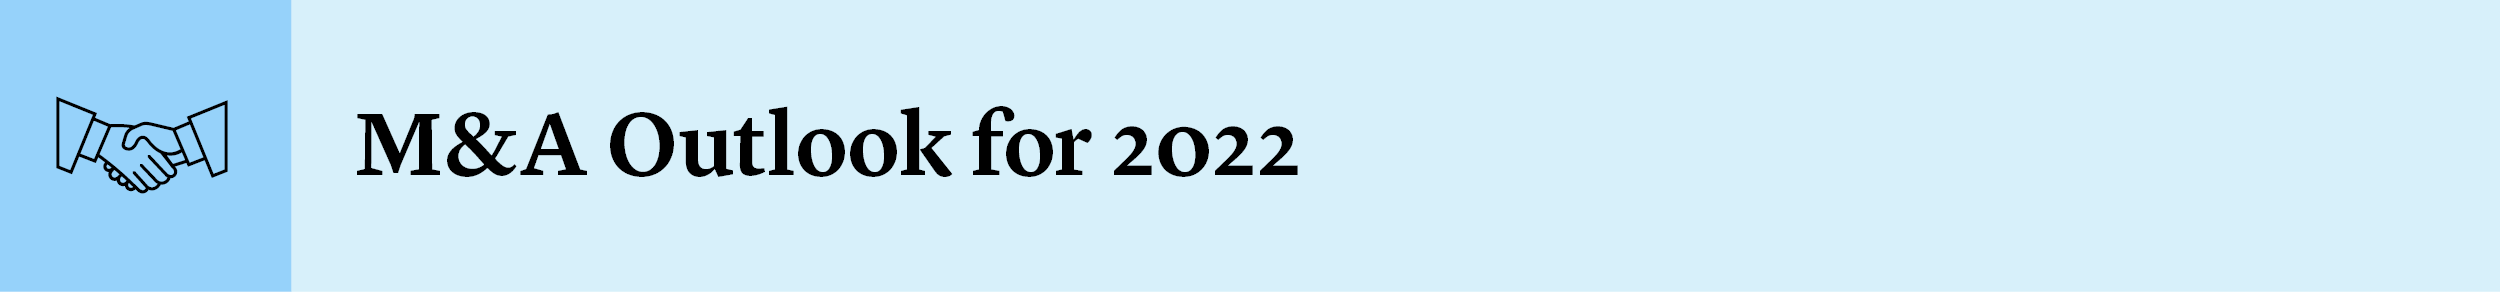 2022-BoardMemoTitles-Icons_1200x140-MandAOutlook